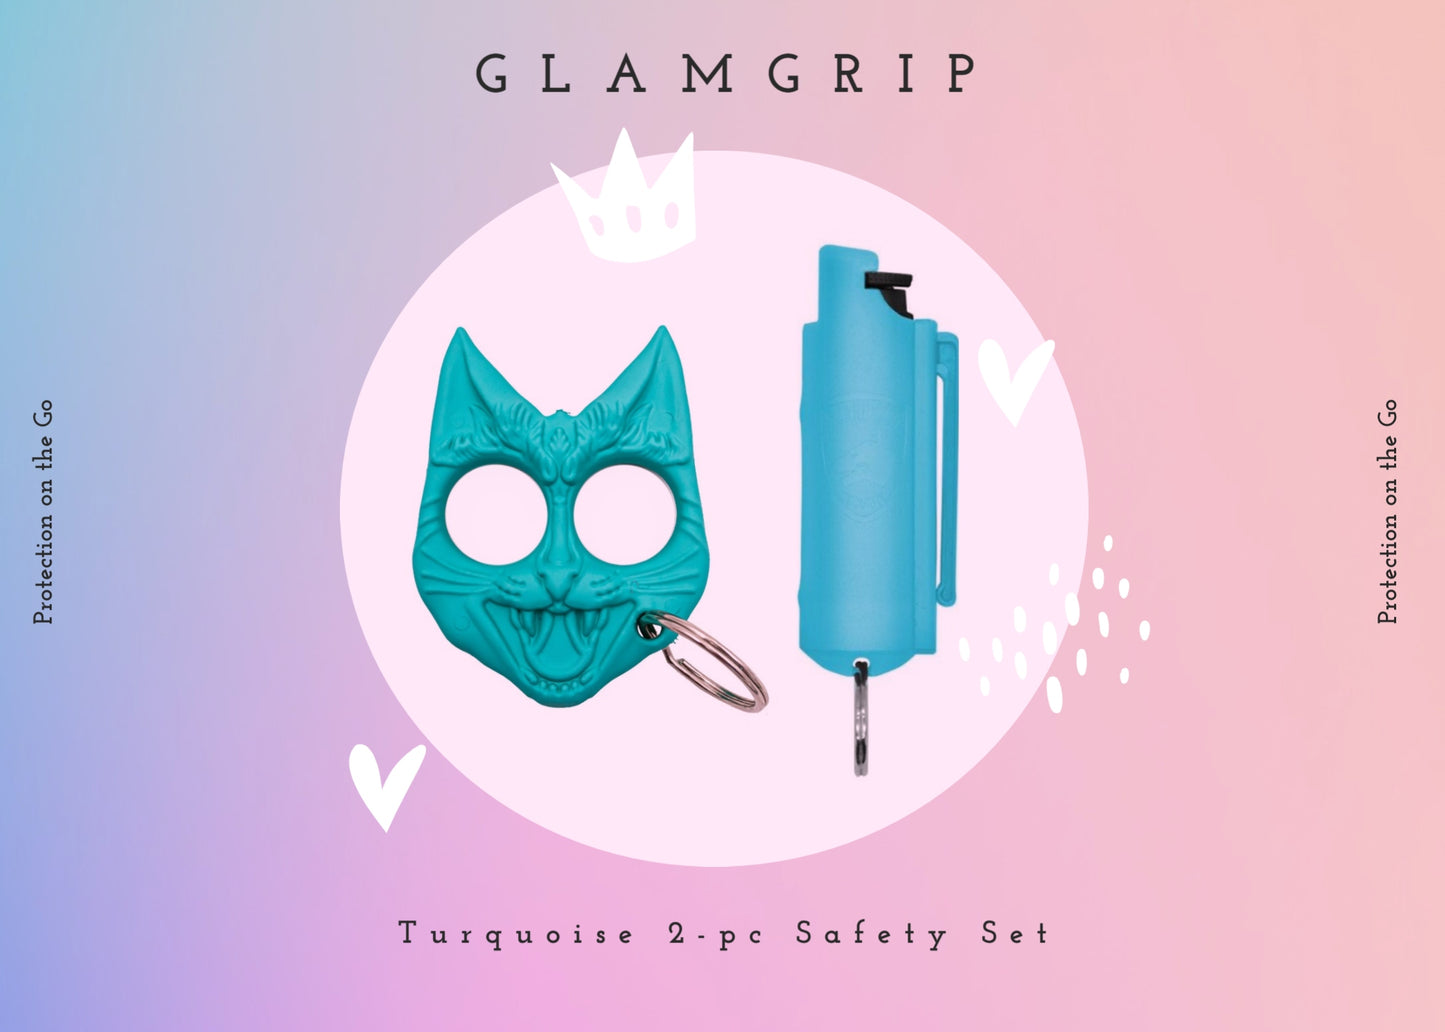 GLAMGRIP 2-pc Safety Set